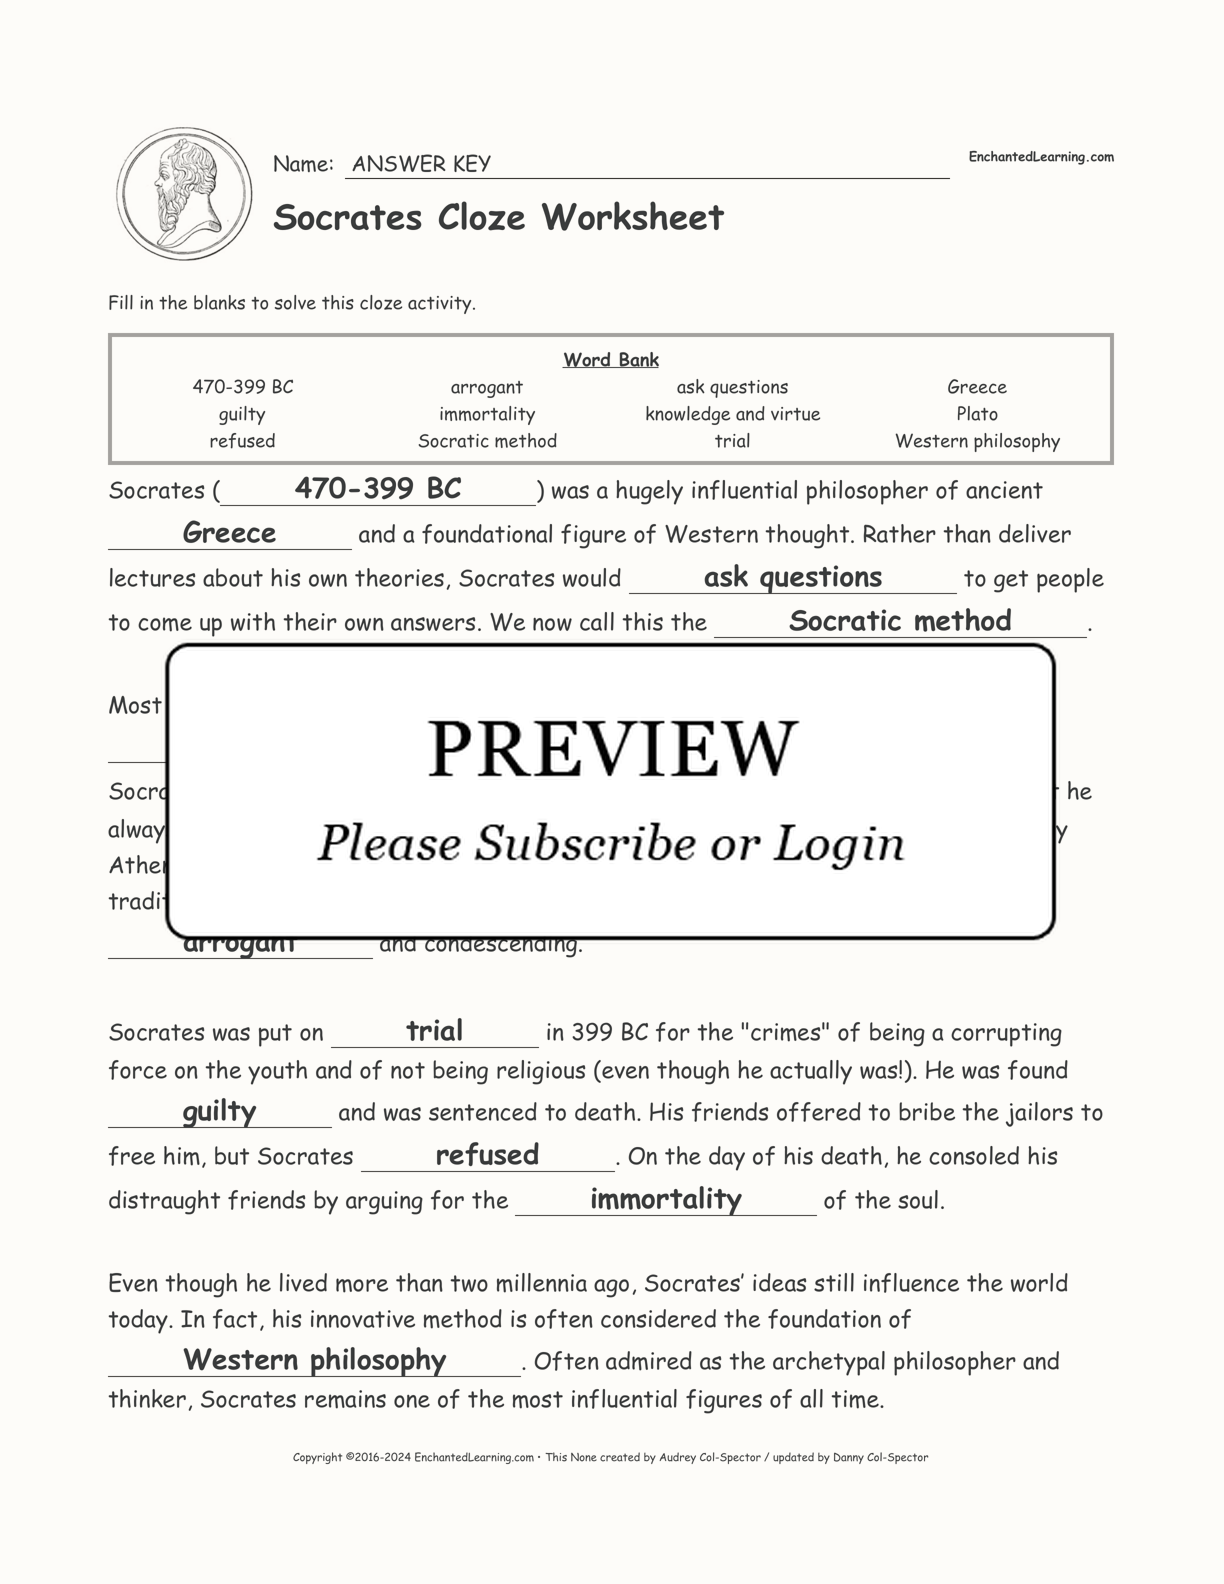 Socrates Cloze Worksheet interactive worksheet page 2